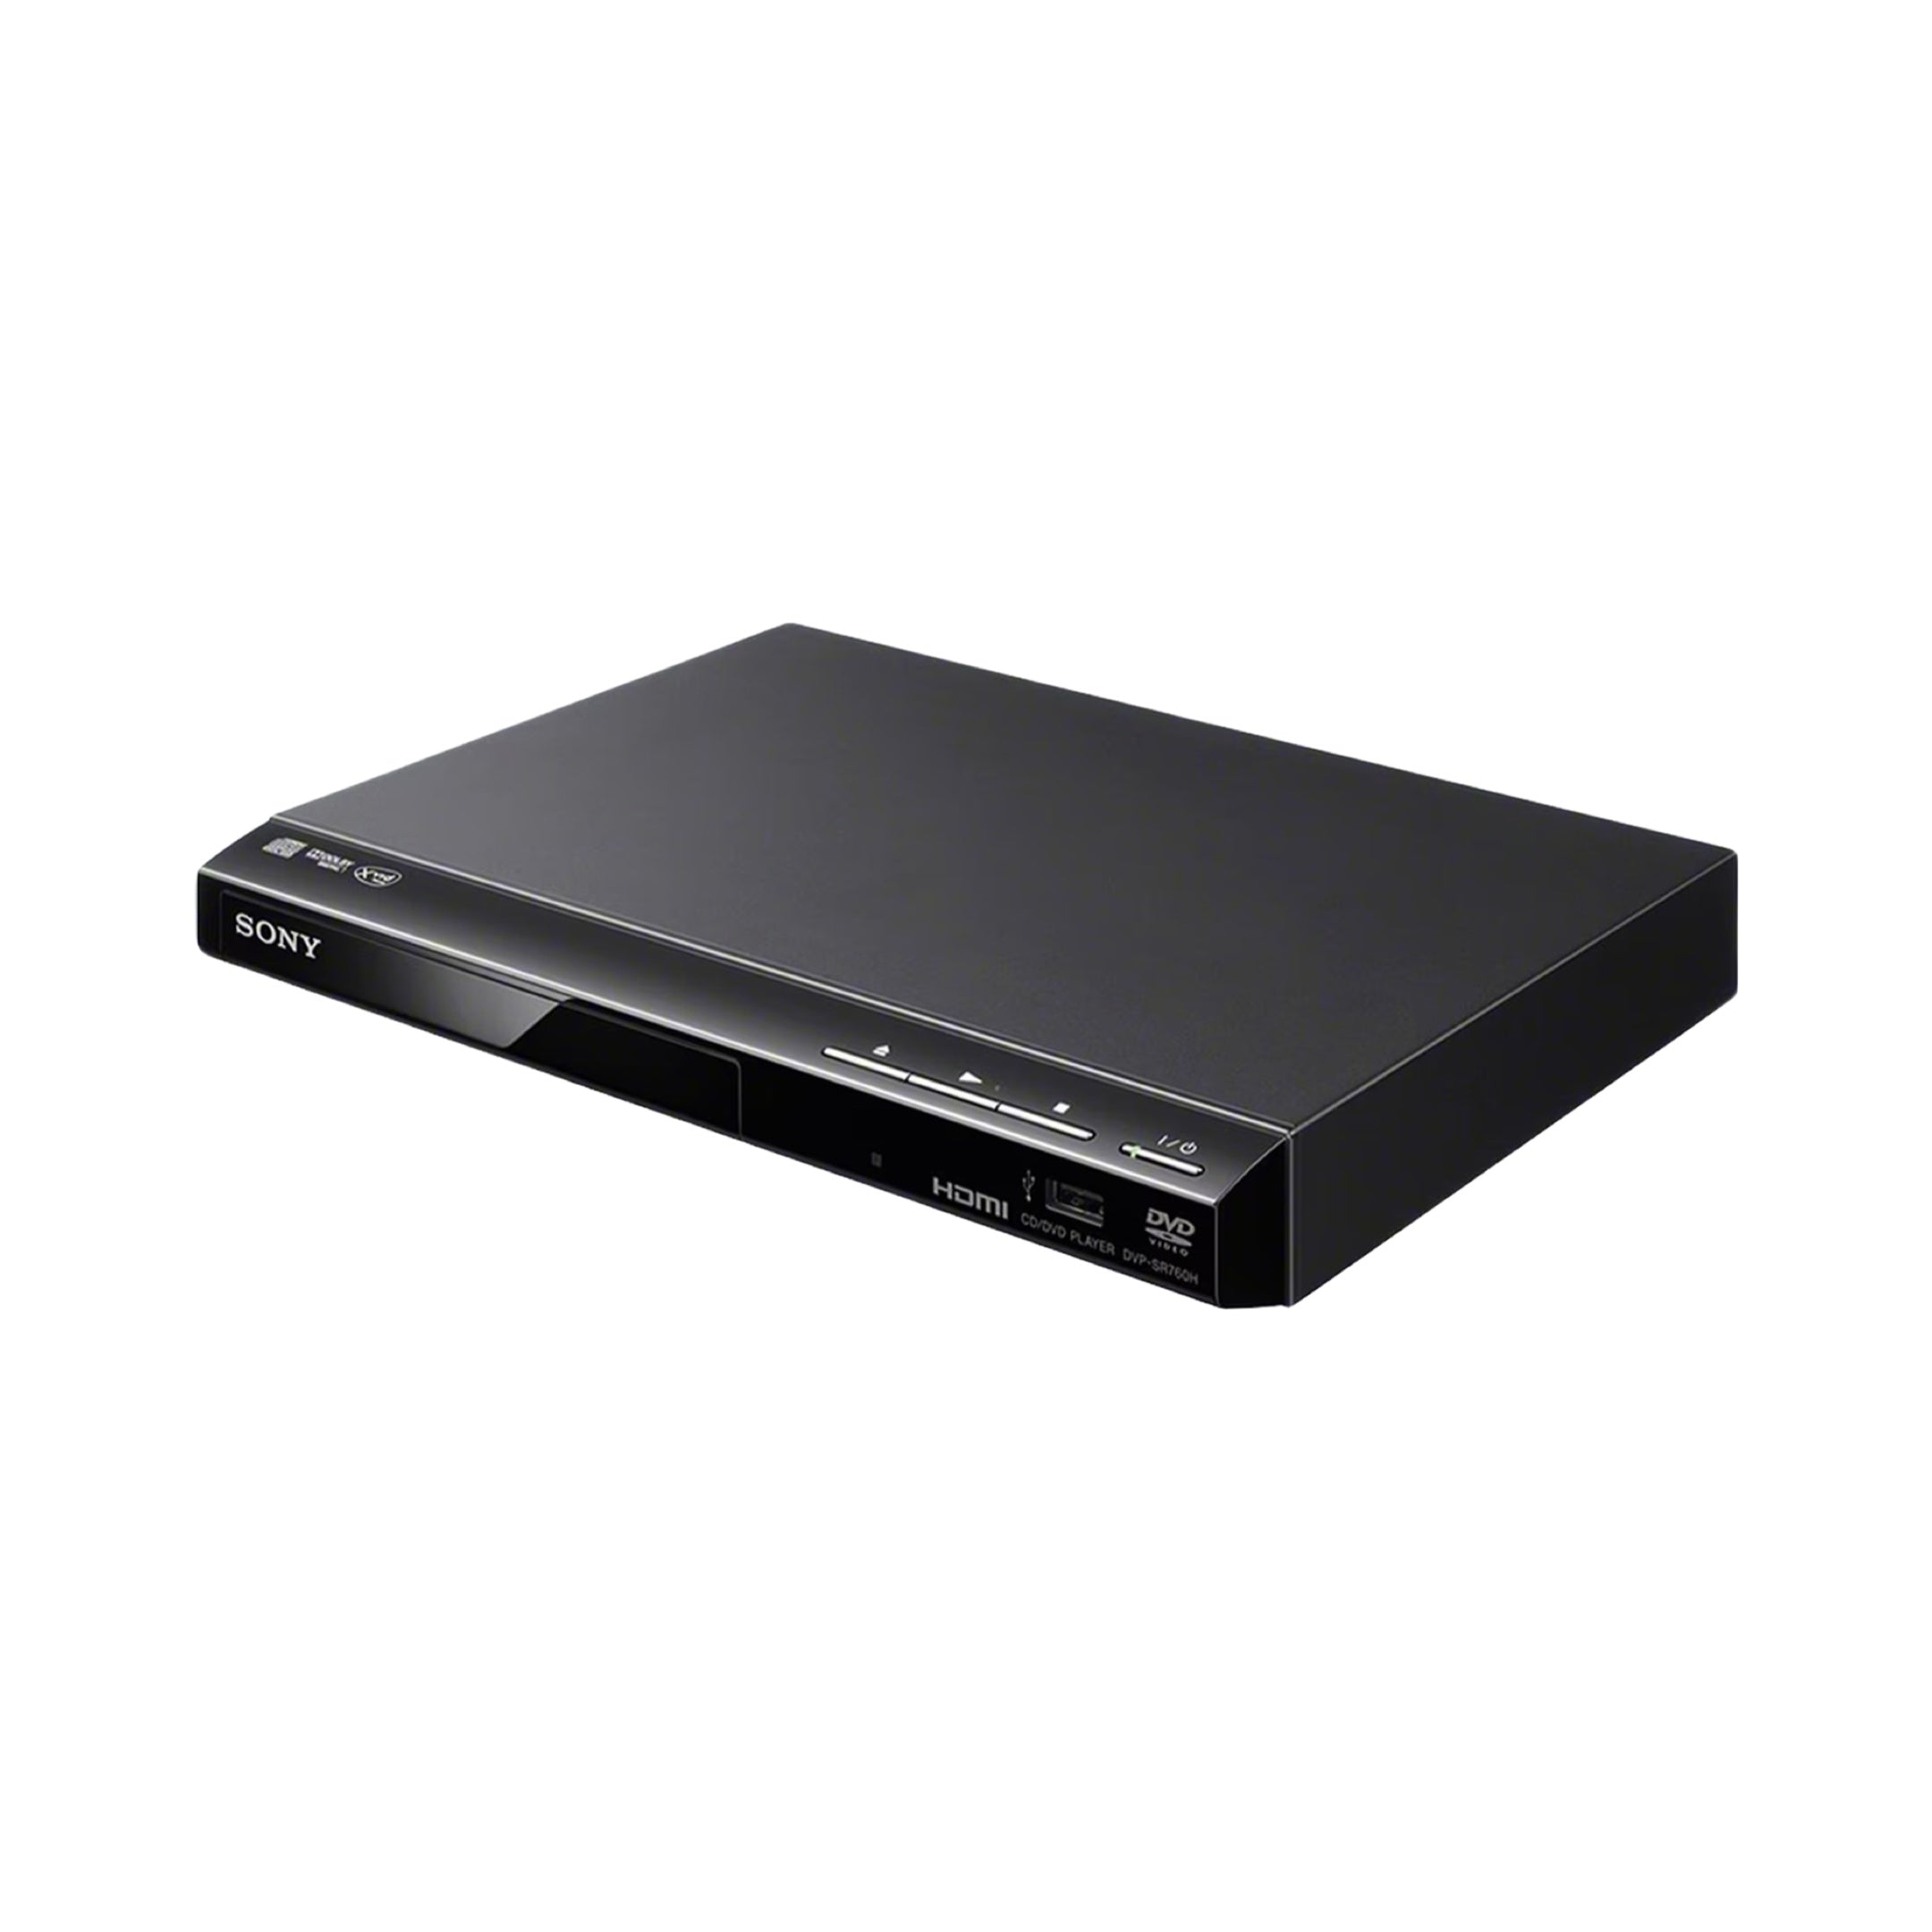 Sony HDMI DVD Player DVP-SR760HP